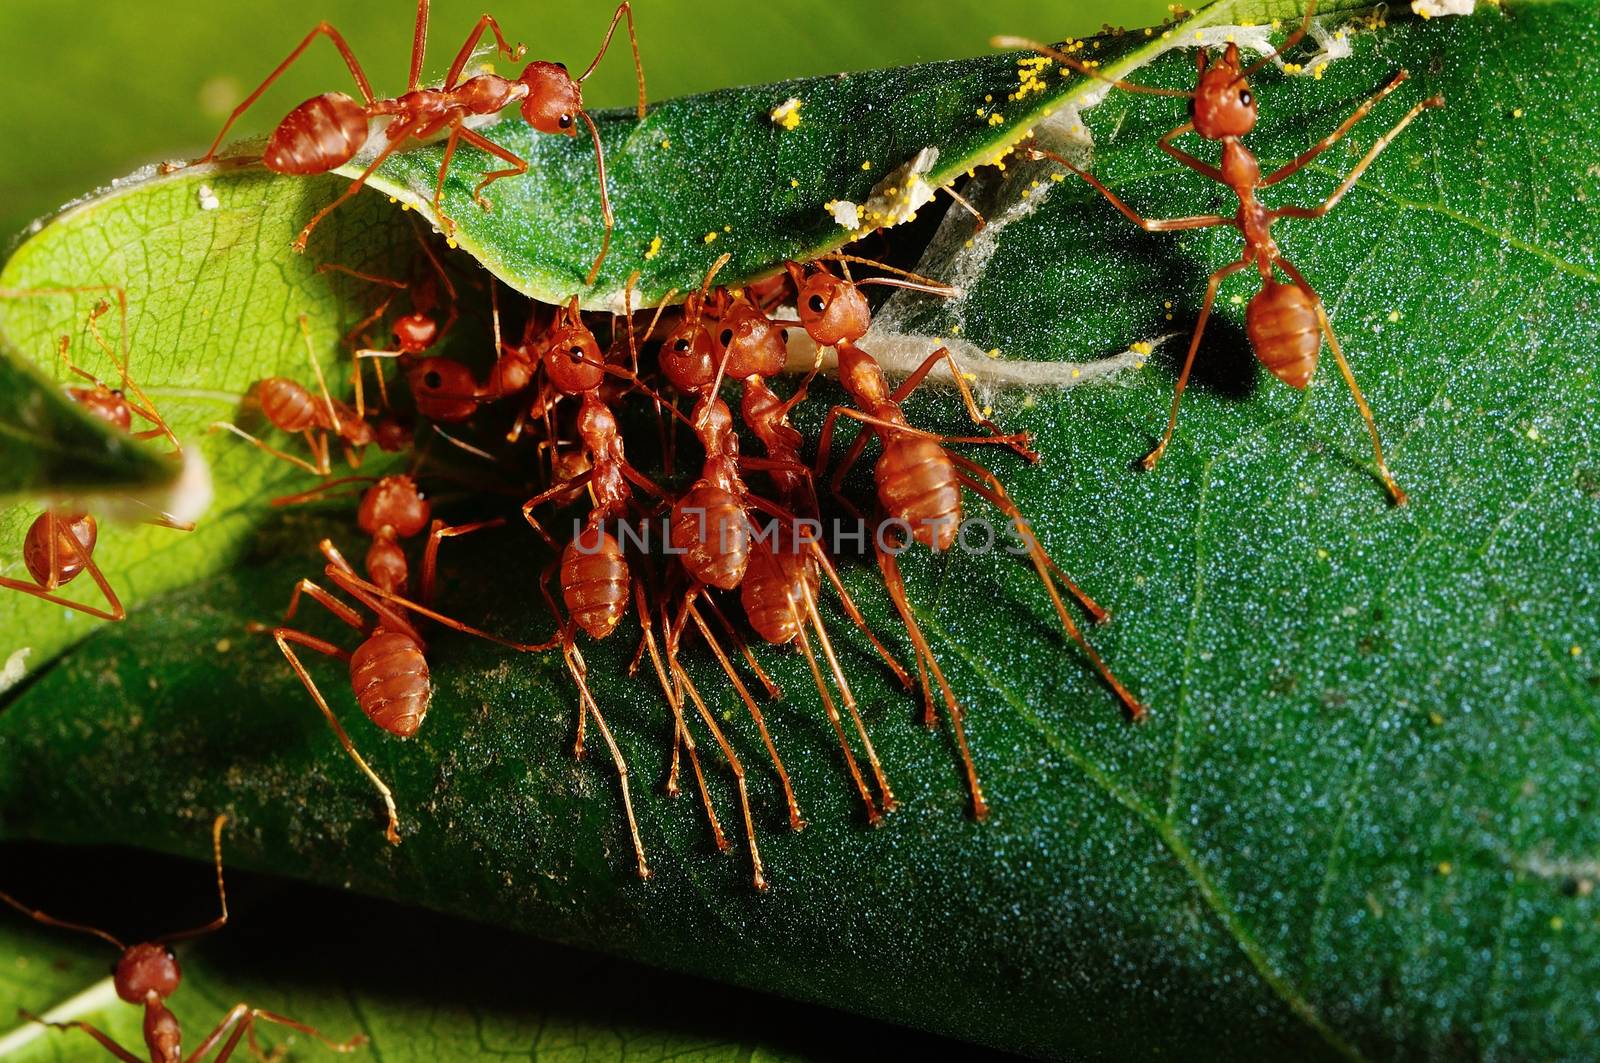 red ant teamwork in green nature by panuruangjan